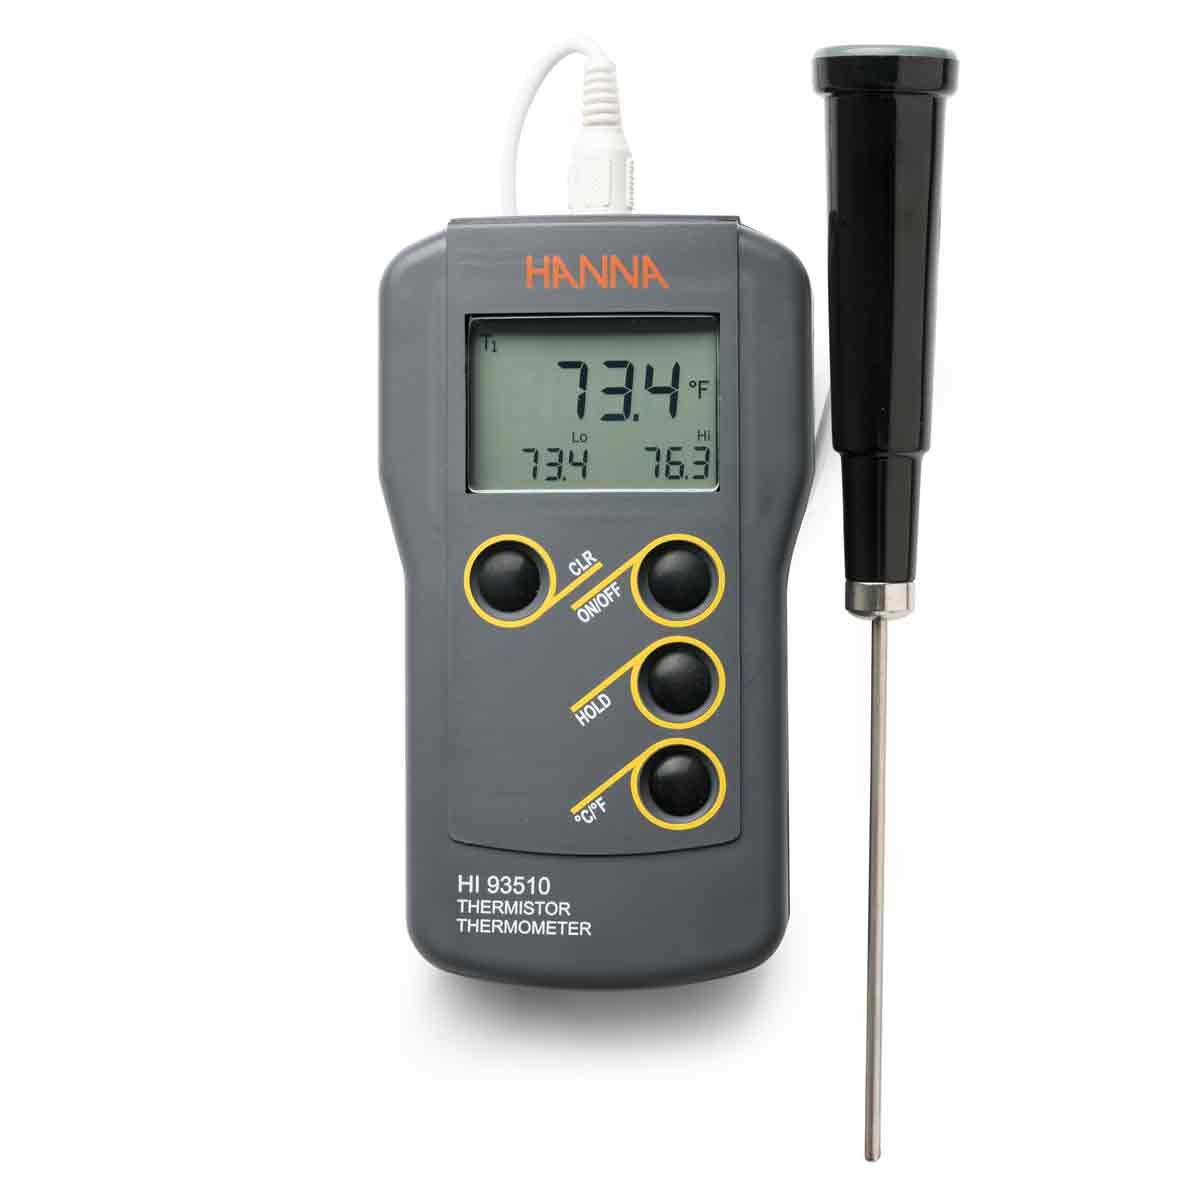 waterproof-thermistor-thermometer-hi93510